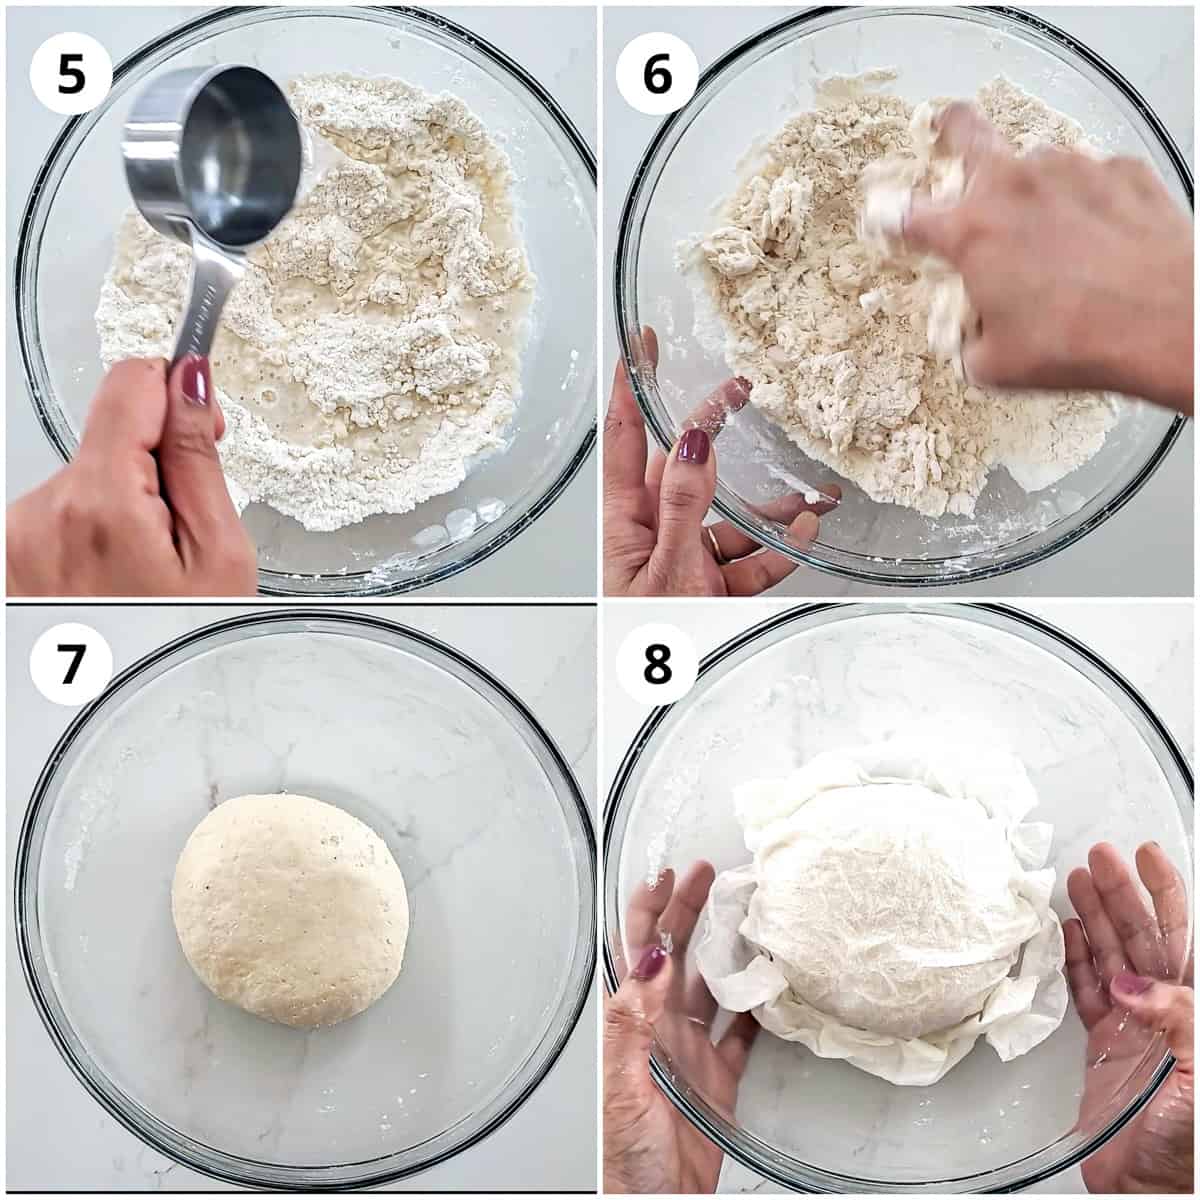 Steps showing making karanji dough and covering it